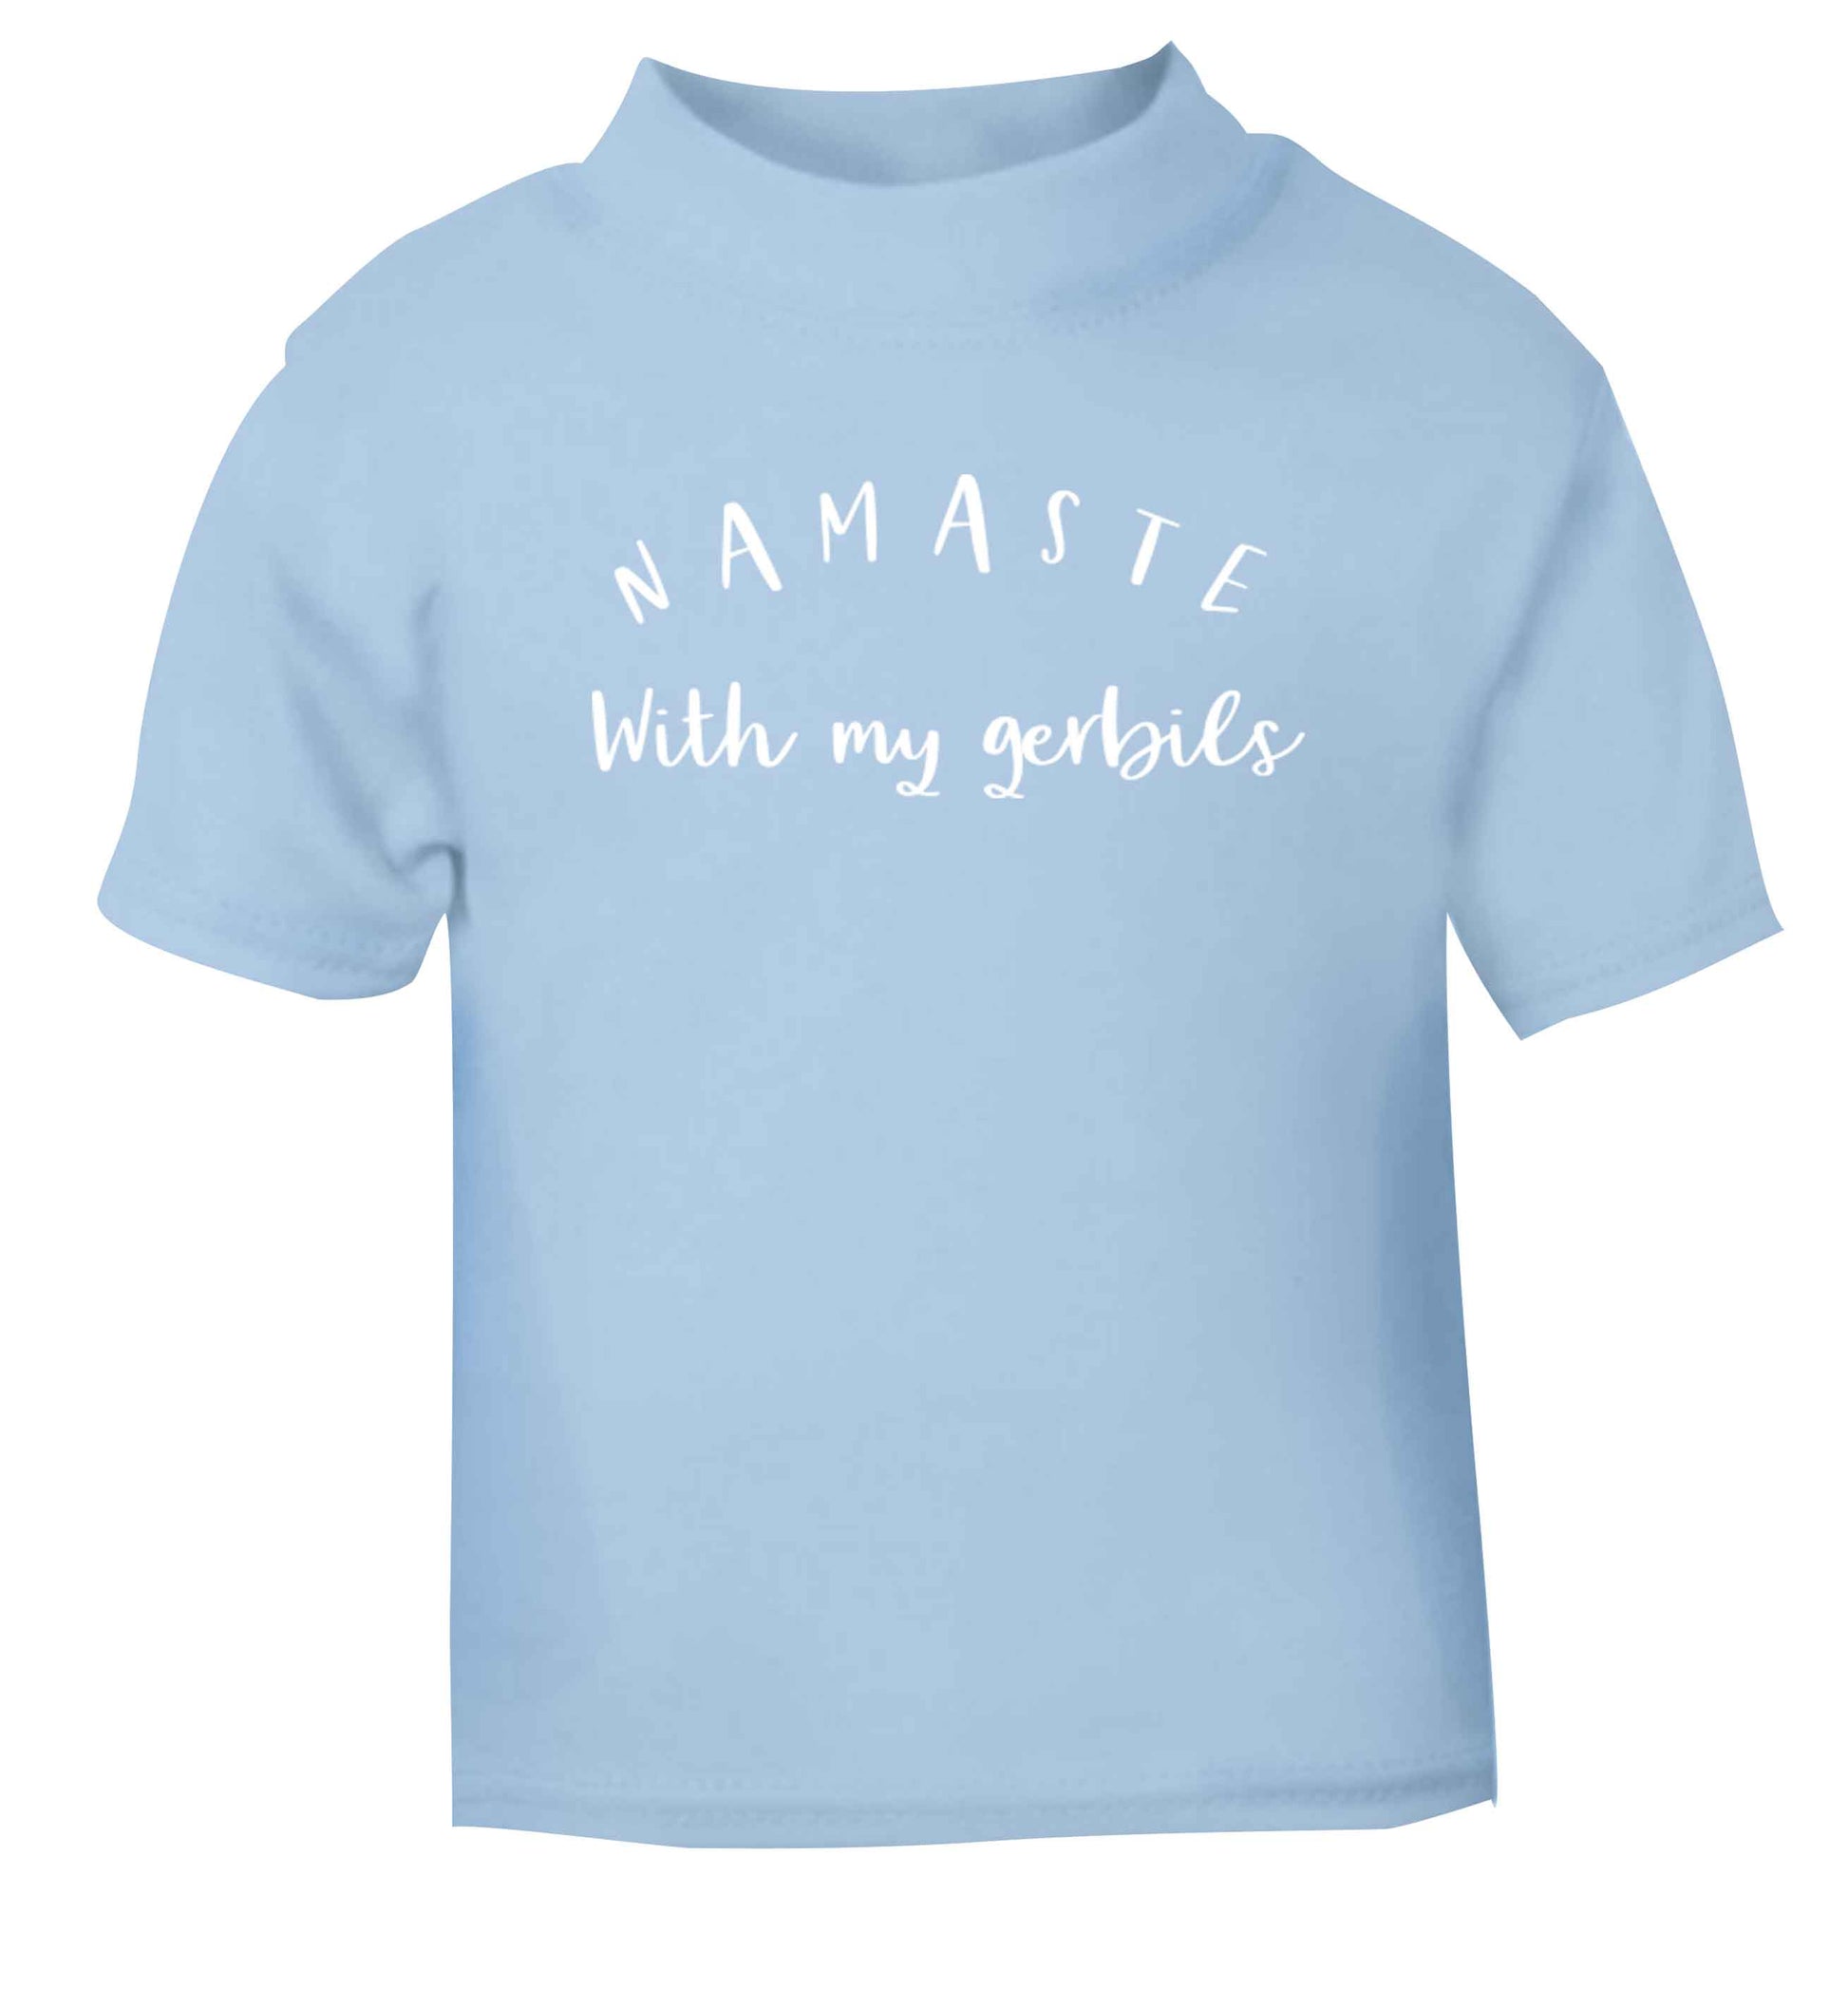 Namaste with my gerbils light blue Baby Toddler Tshirt 2 Years